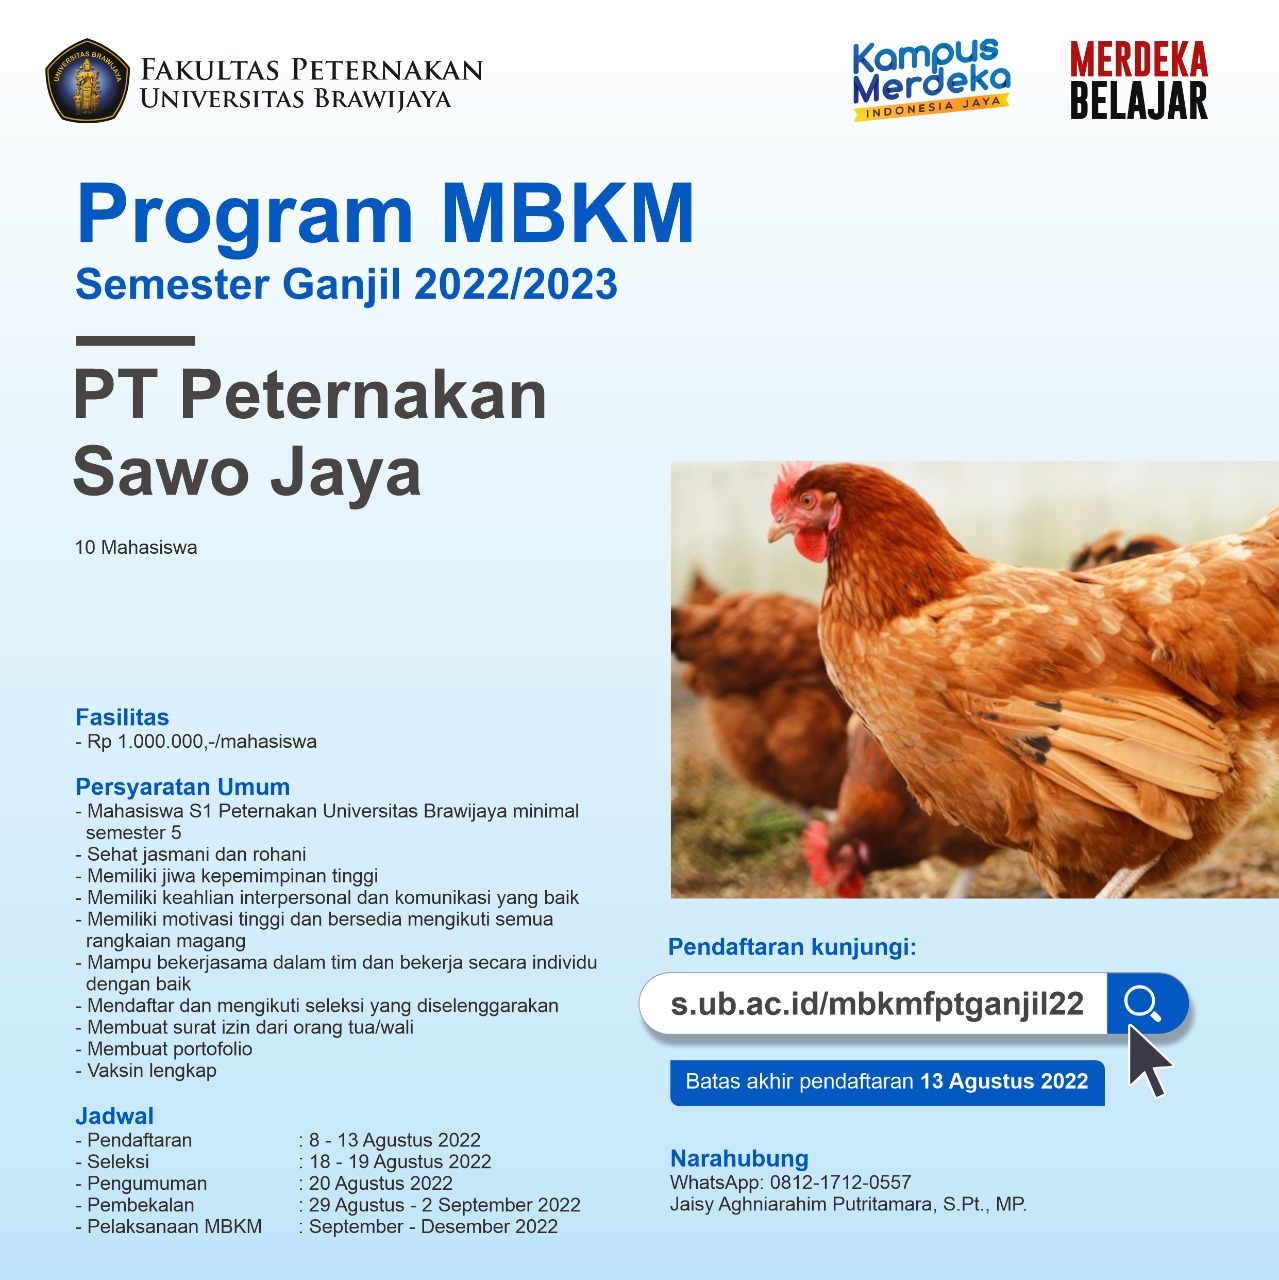 Program MBKM Semester Ganjil 2022/2023 PT. Peternakan Sawo Jaya